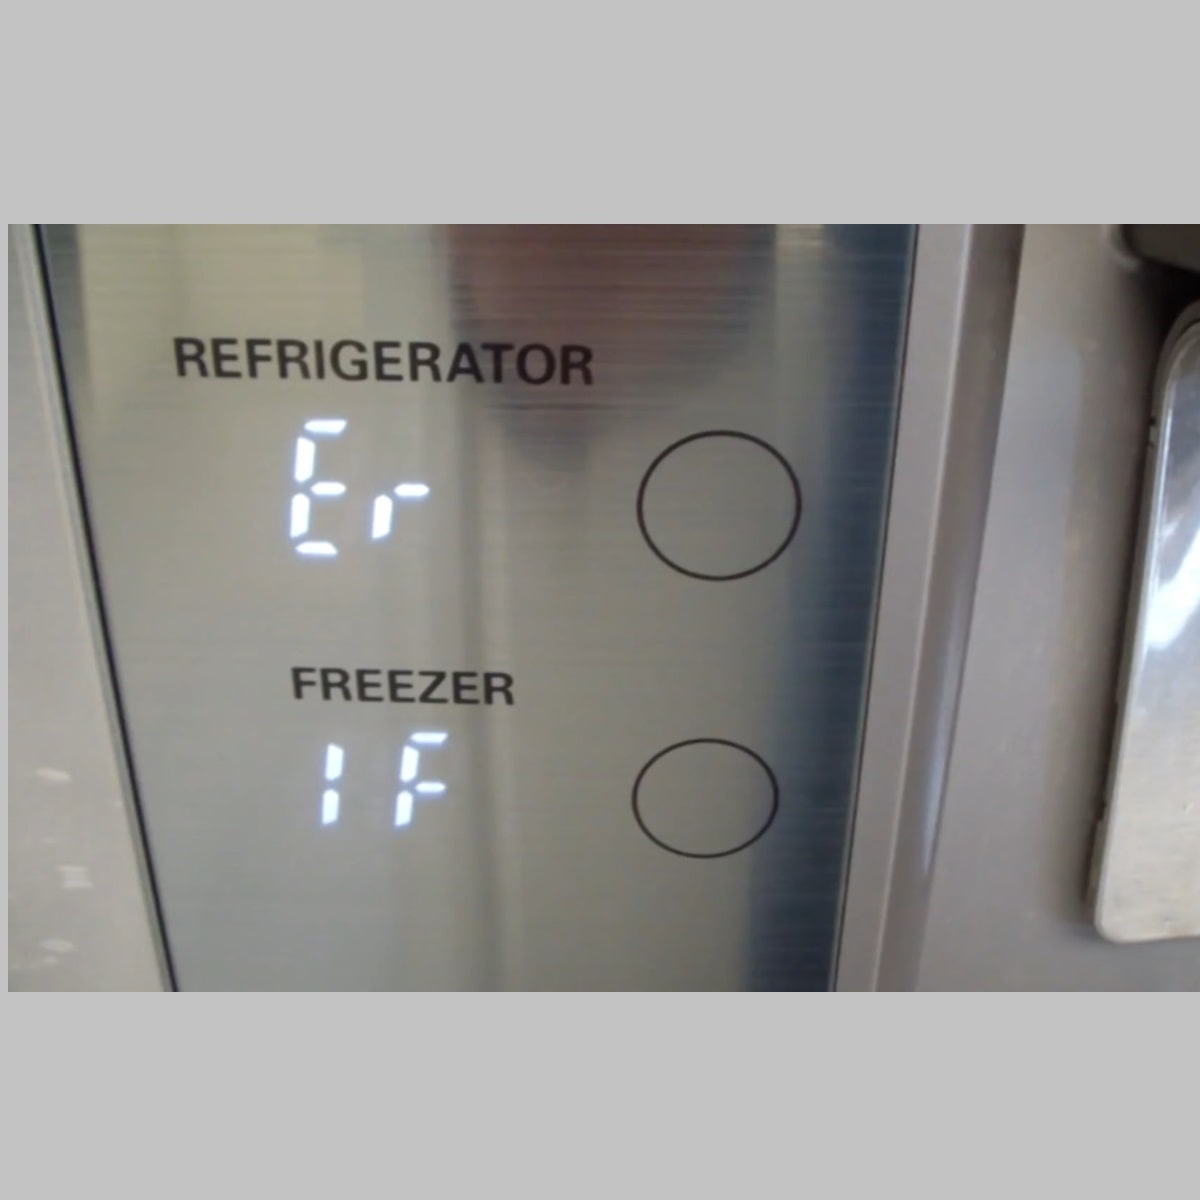 LG refrigerator blink codes